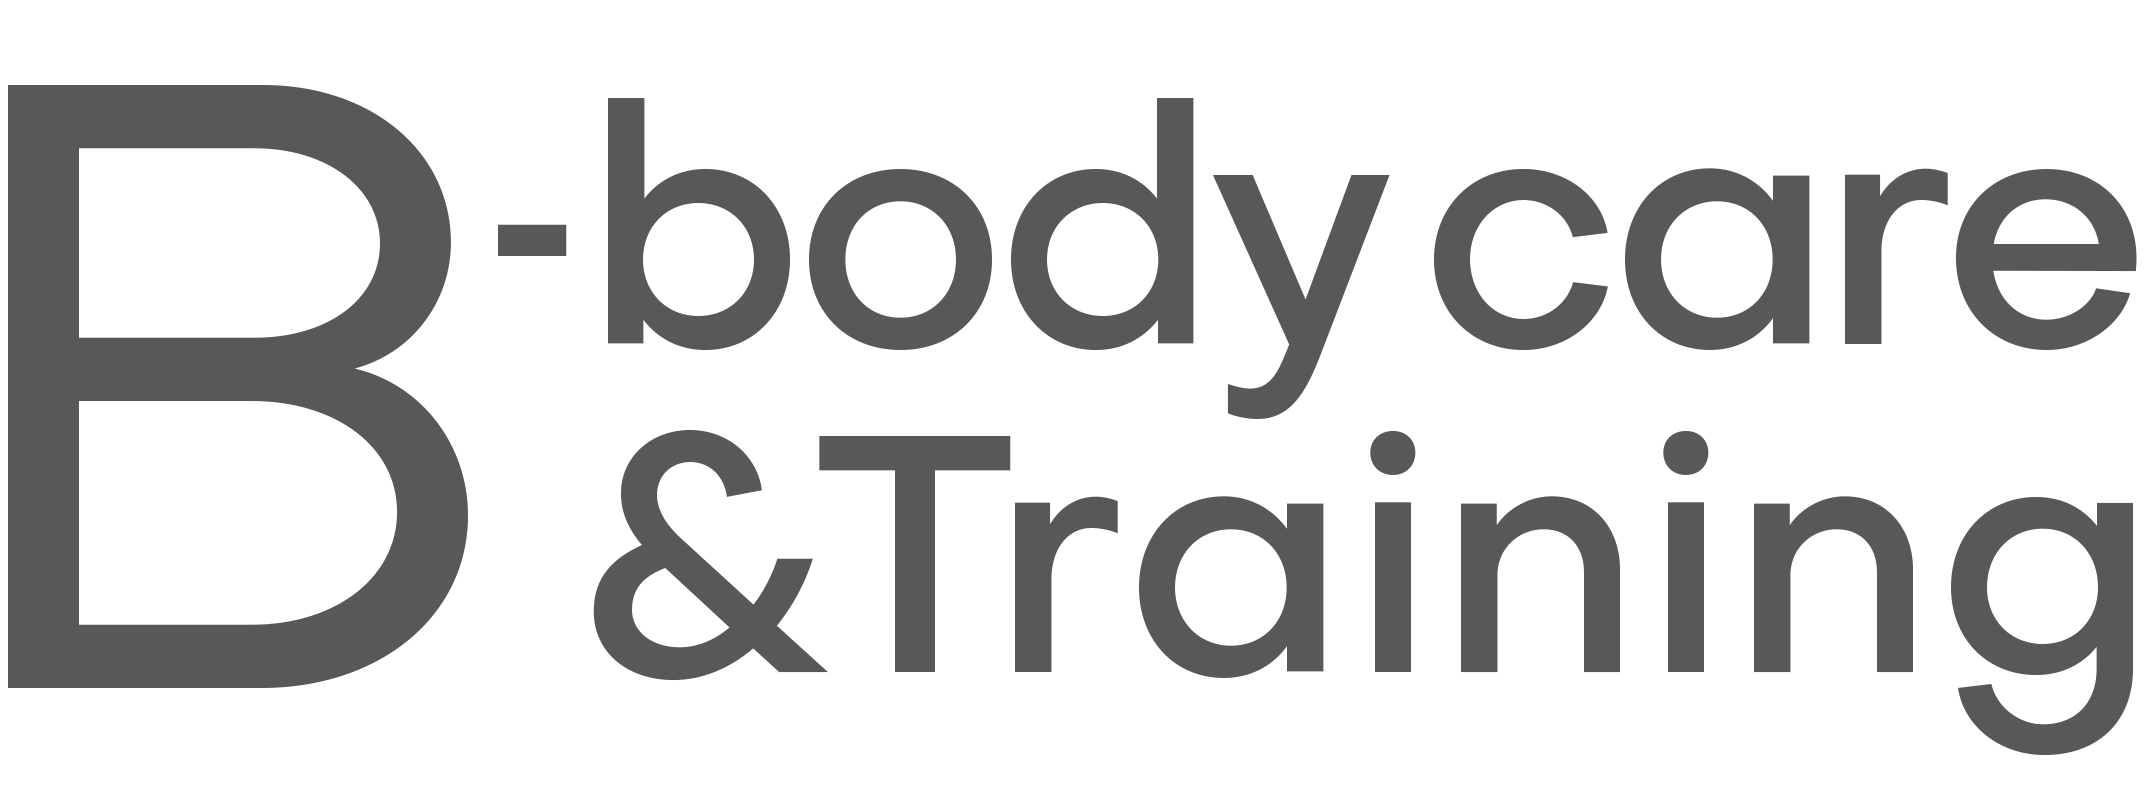 B-body care&training